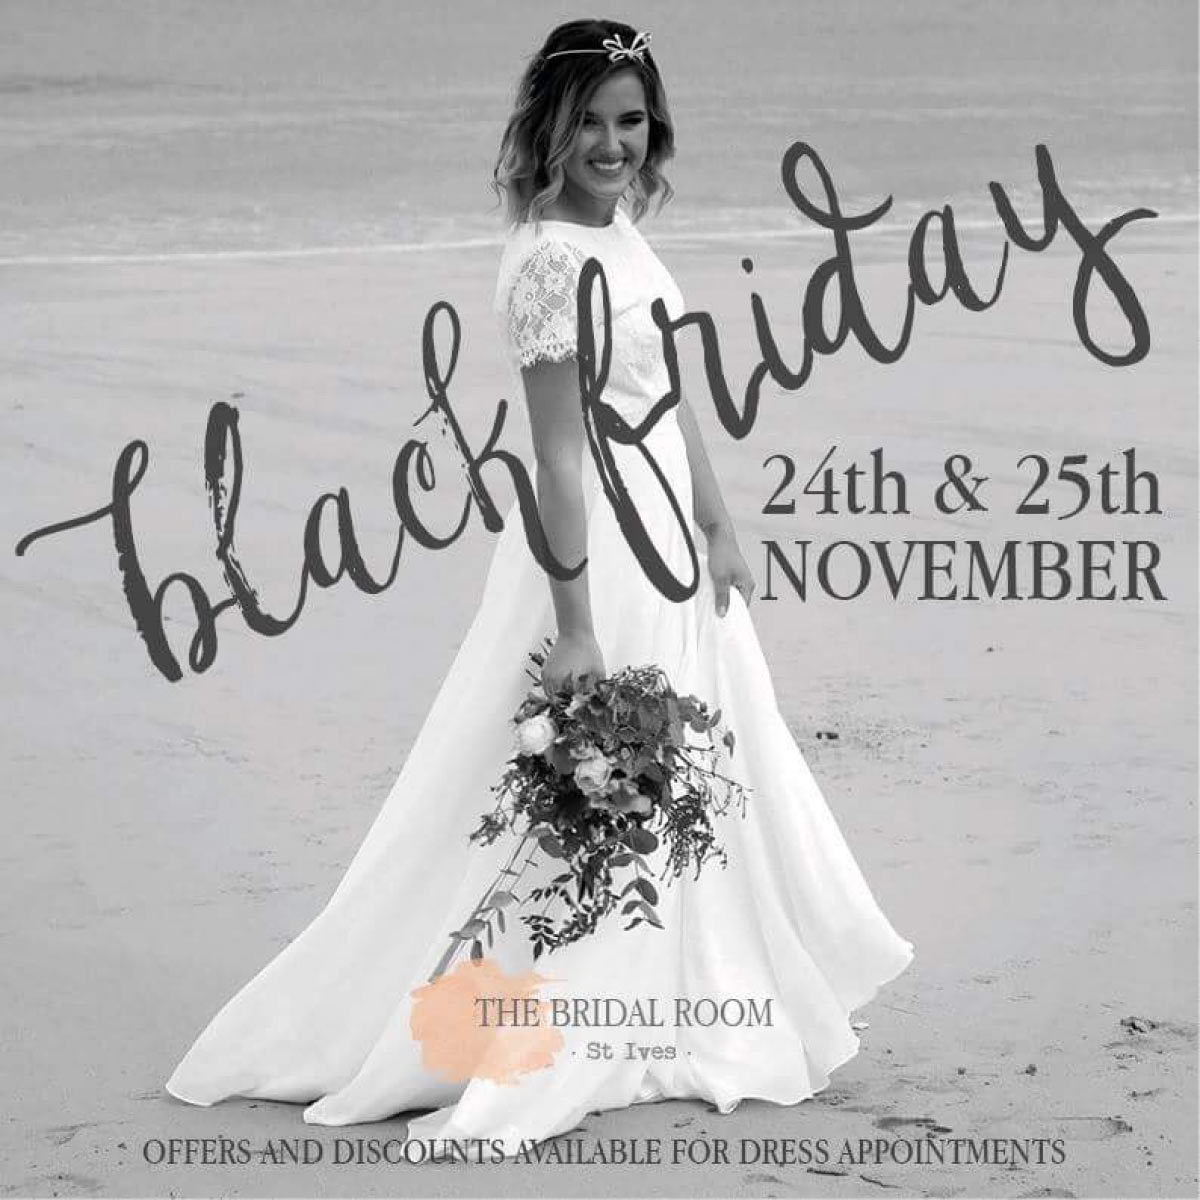 Black Friday sale at The Bridal Room St Ives